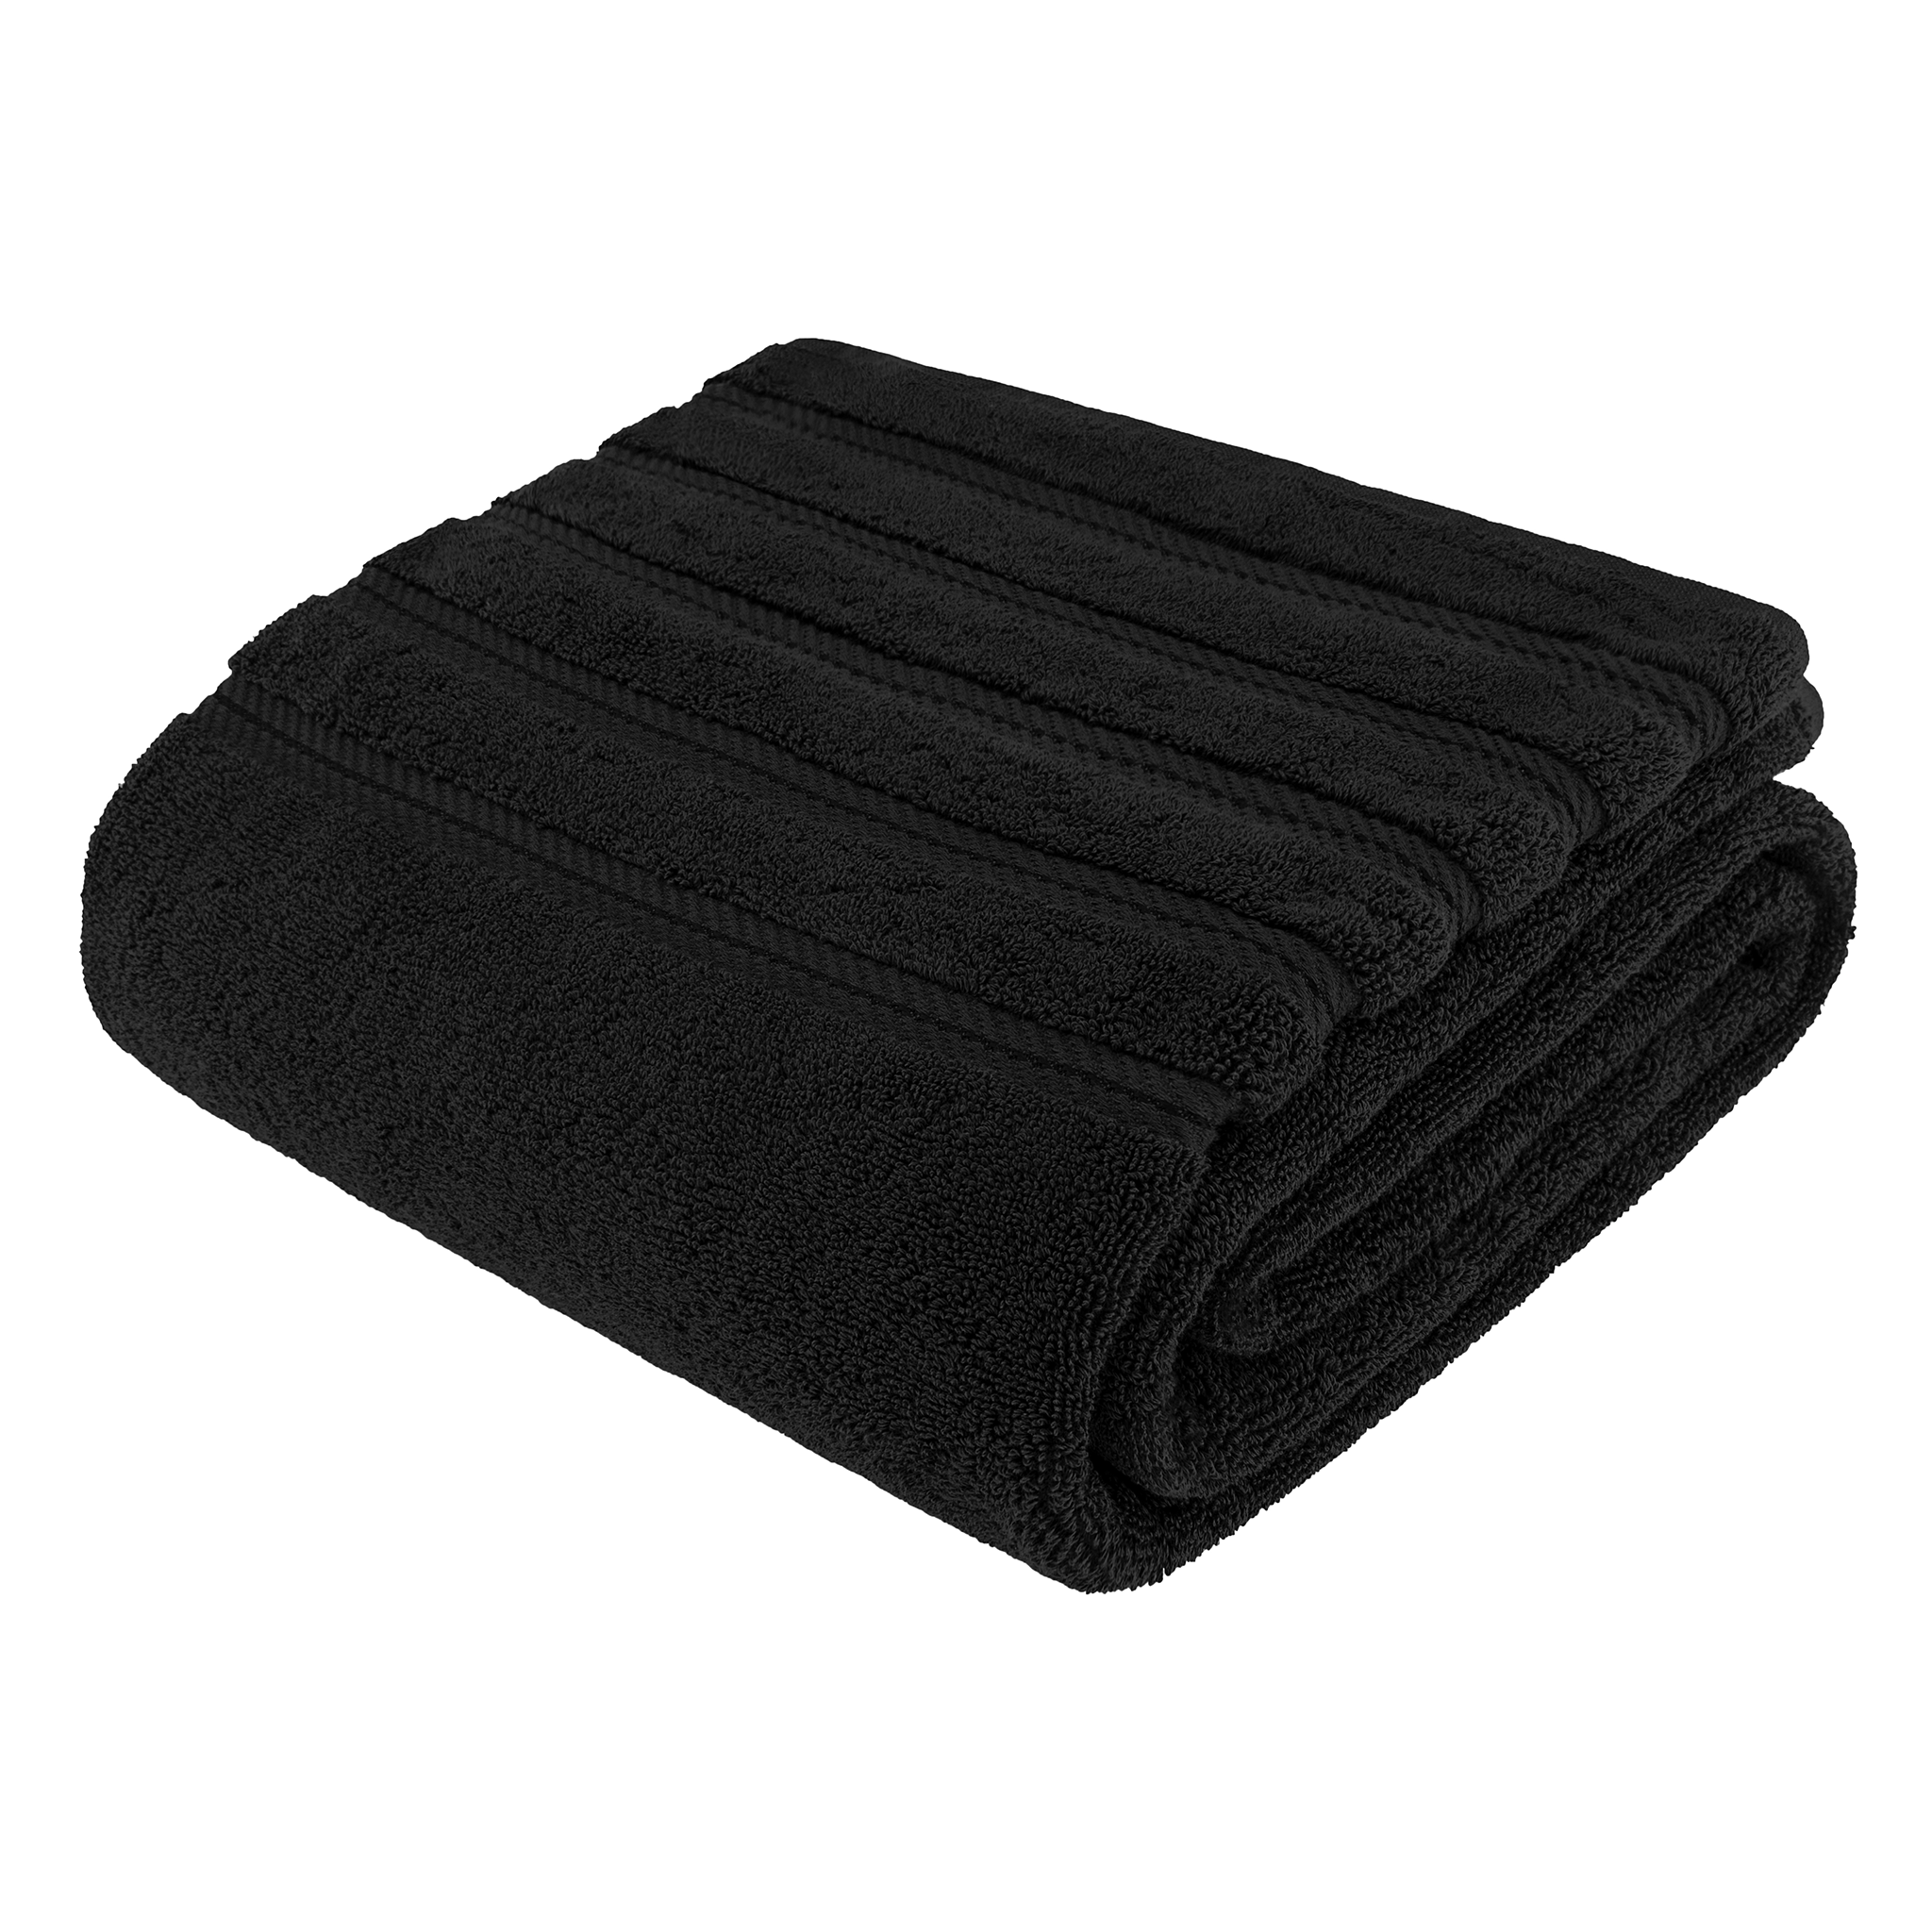 American Soft Linen - 35x70 Jumbo Bath Sheet Turkish Bath Towel - 16 Piece Case Pack - Black - 7